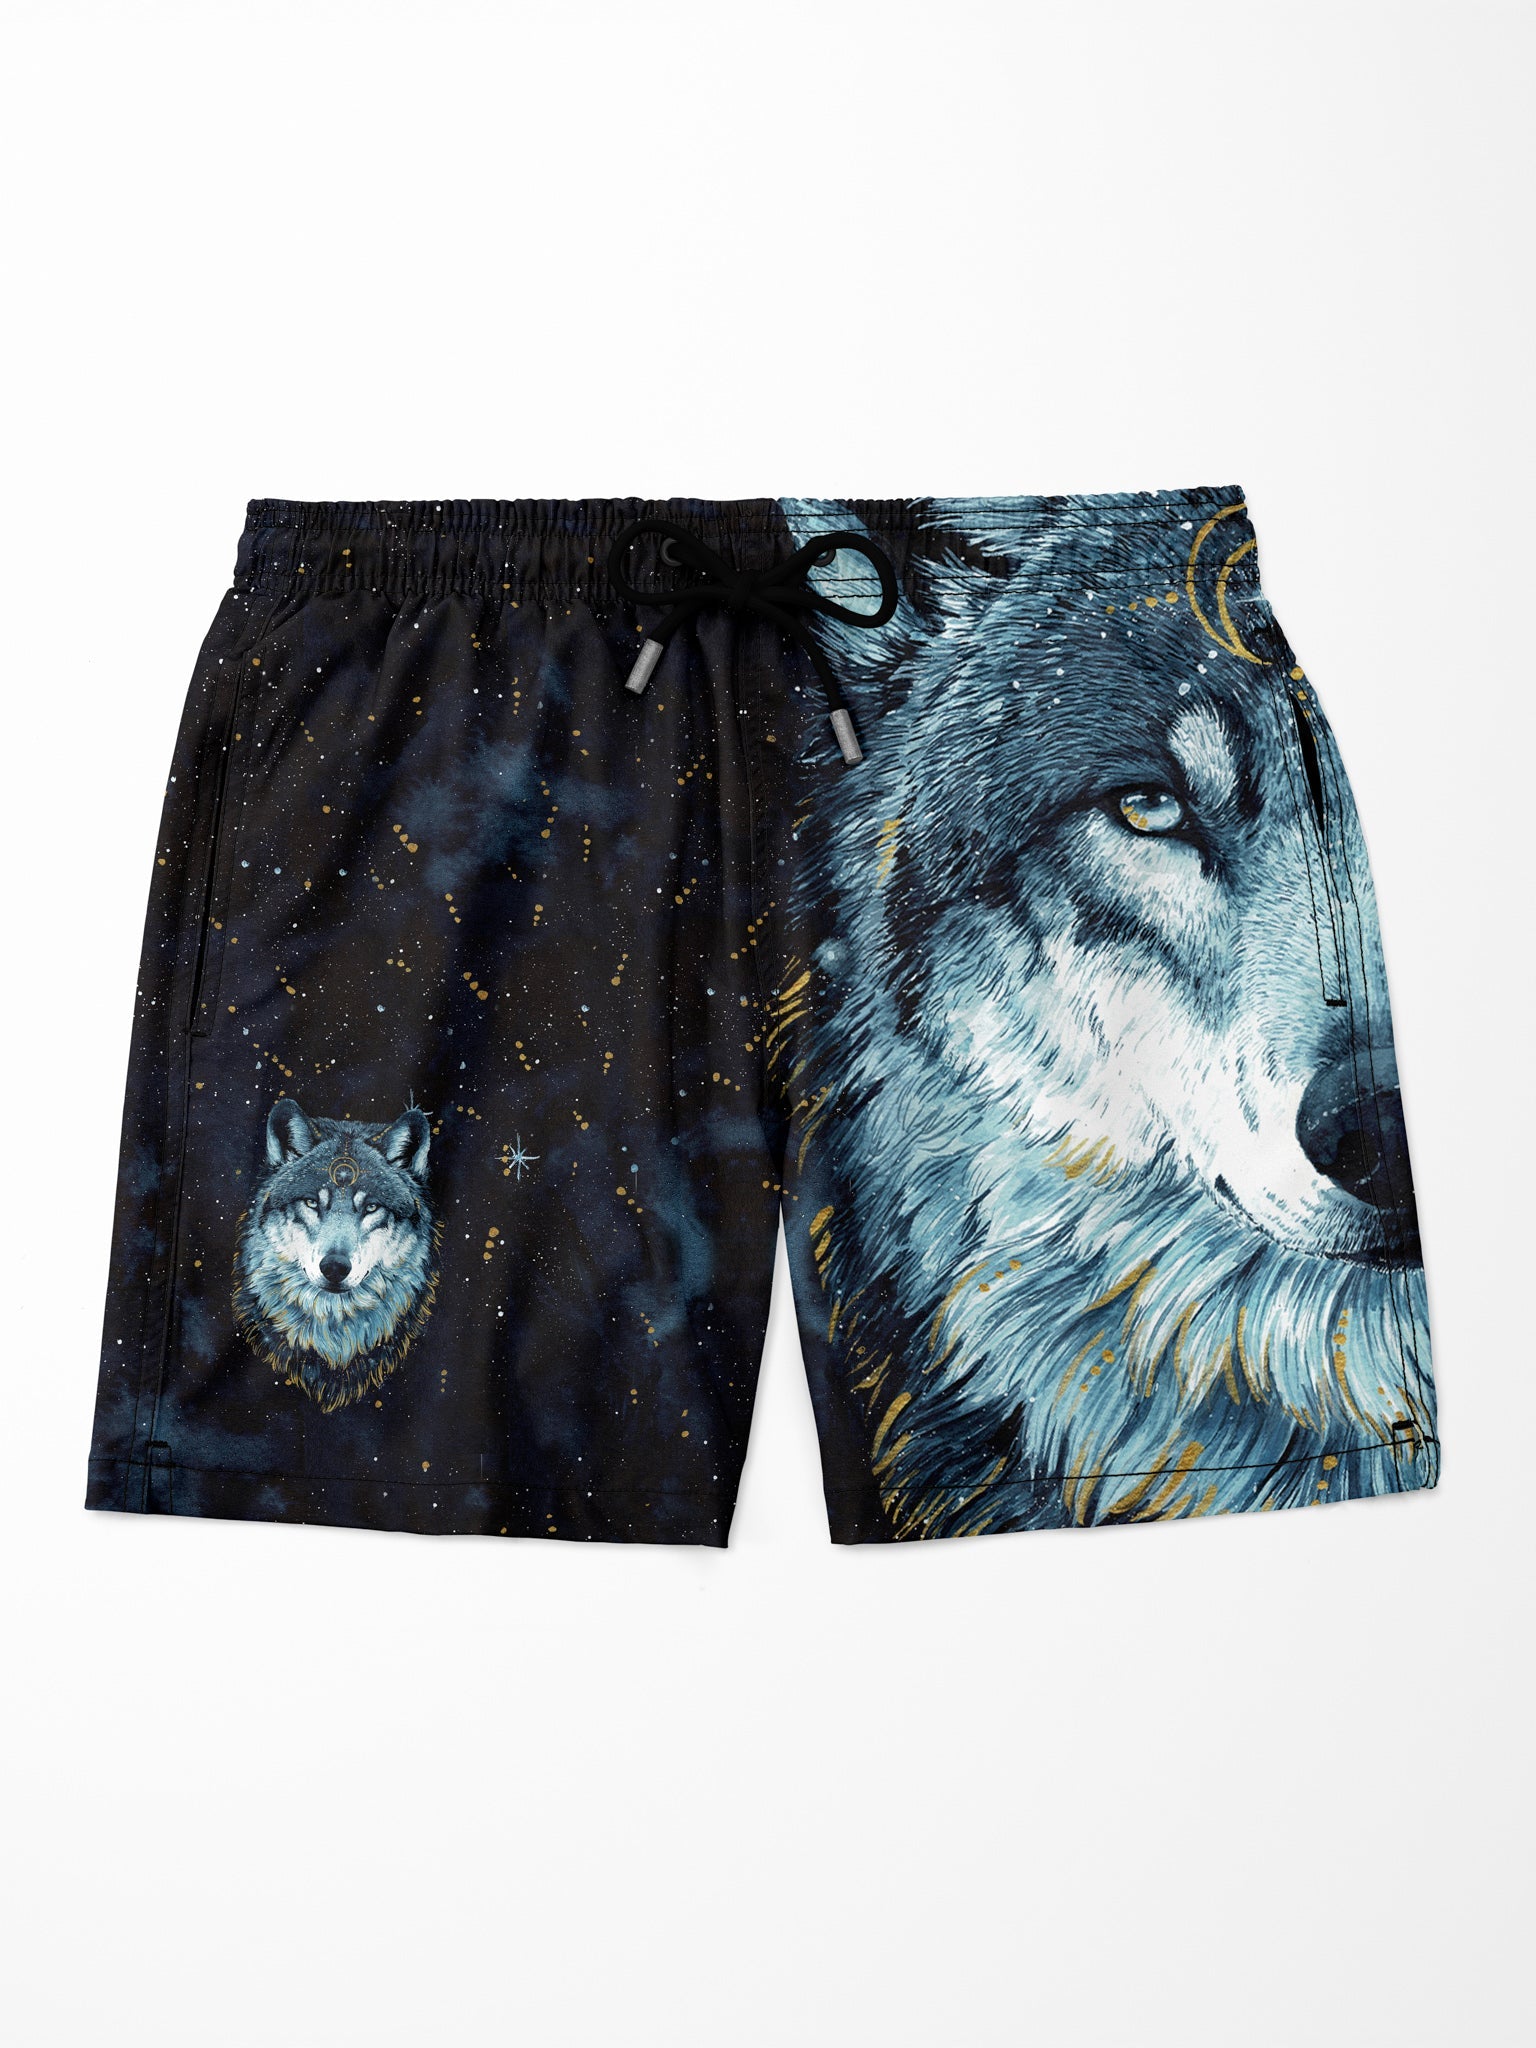 POWERWOLF men Shorts Night Of The Werewolves UNISEX US cool summer -  AliExpress